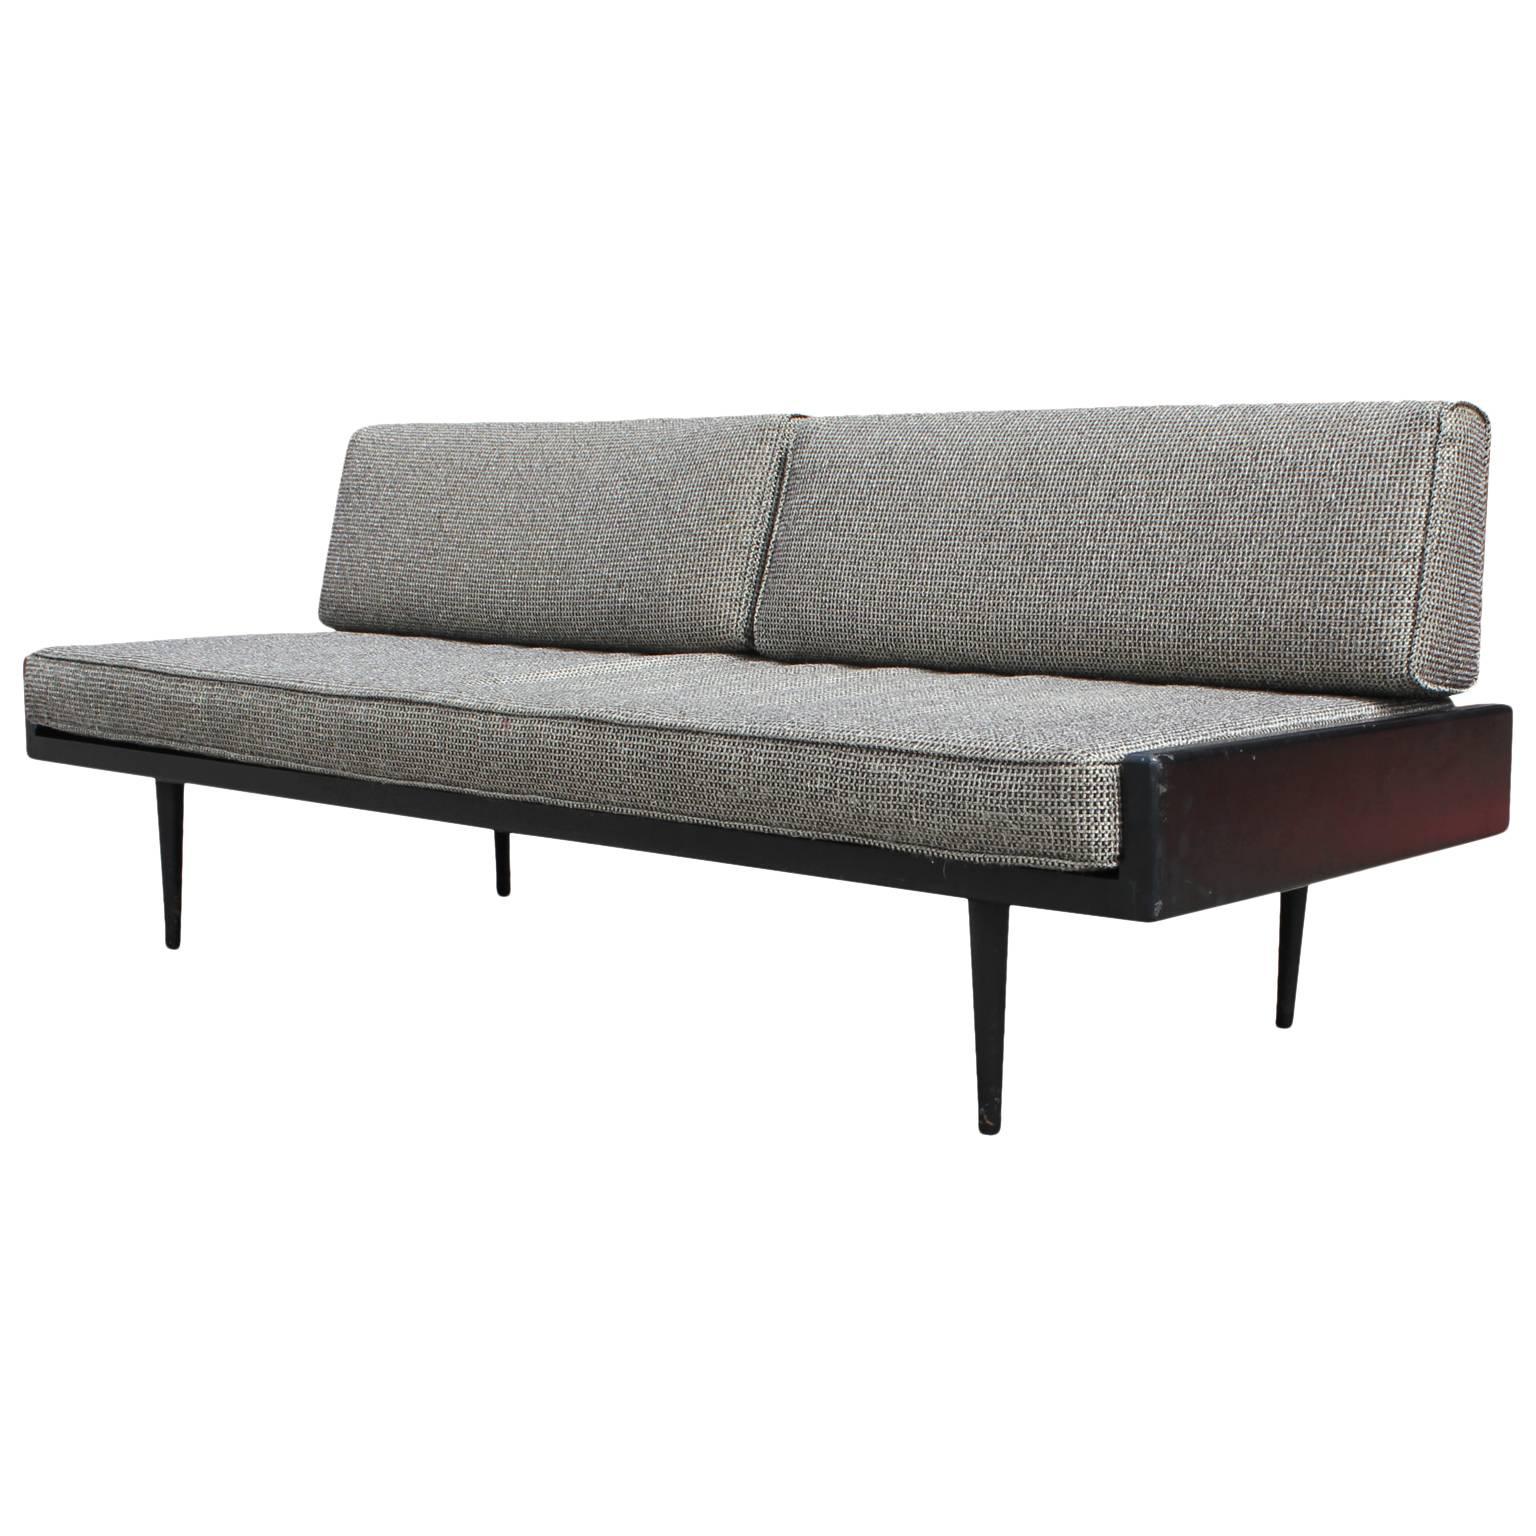 Sleek Armless Danish Style Sofa or Daybed